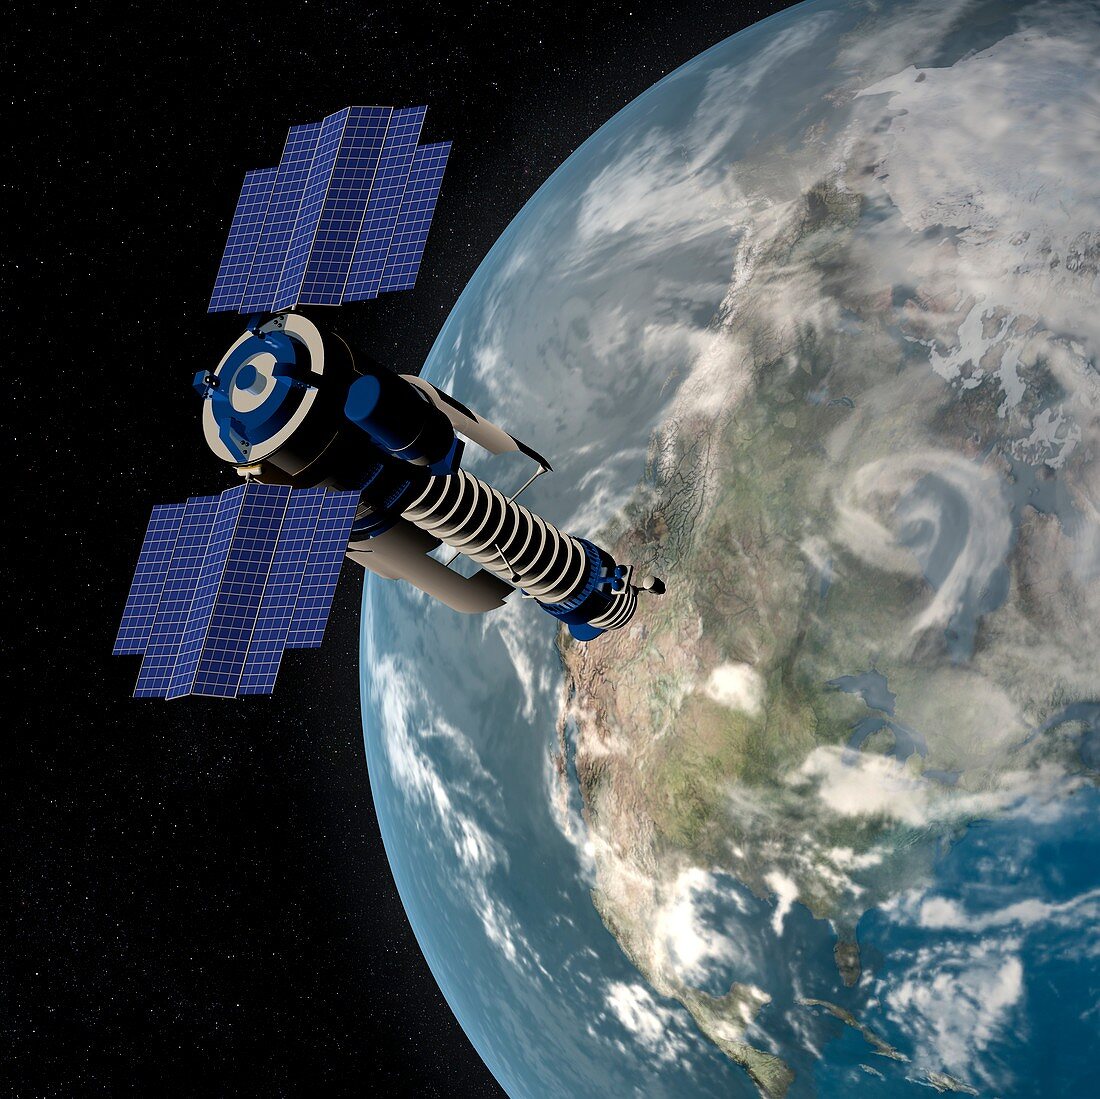 Resurs-DK1 satellite,artwork